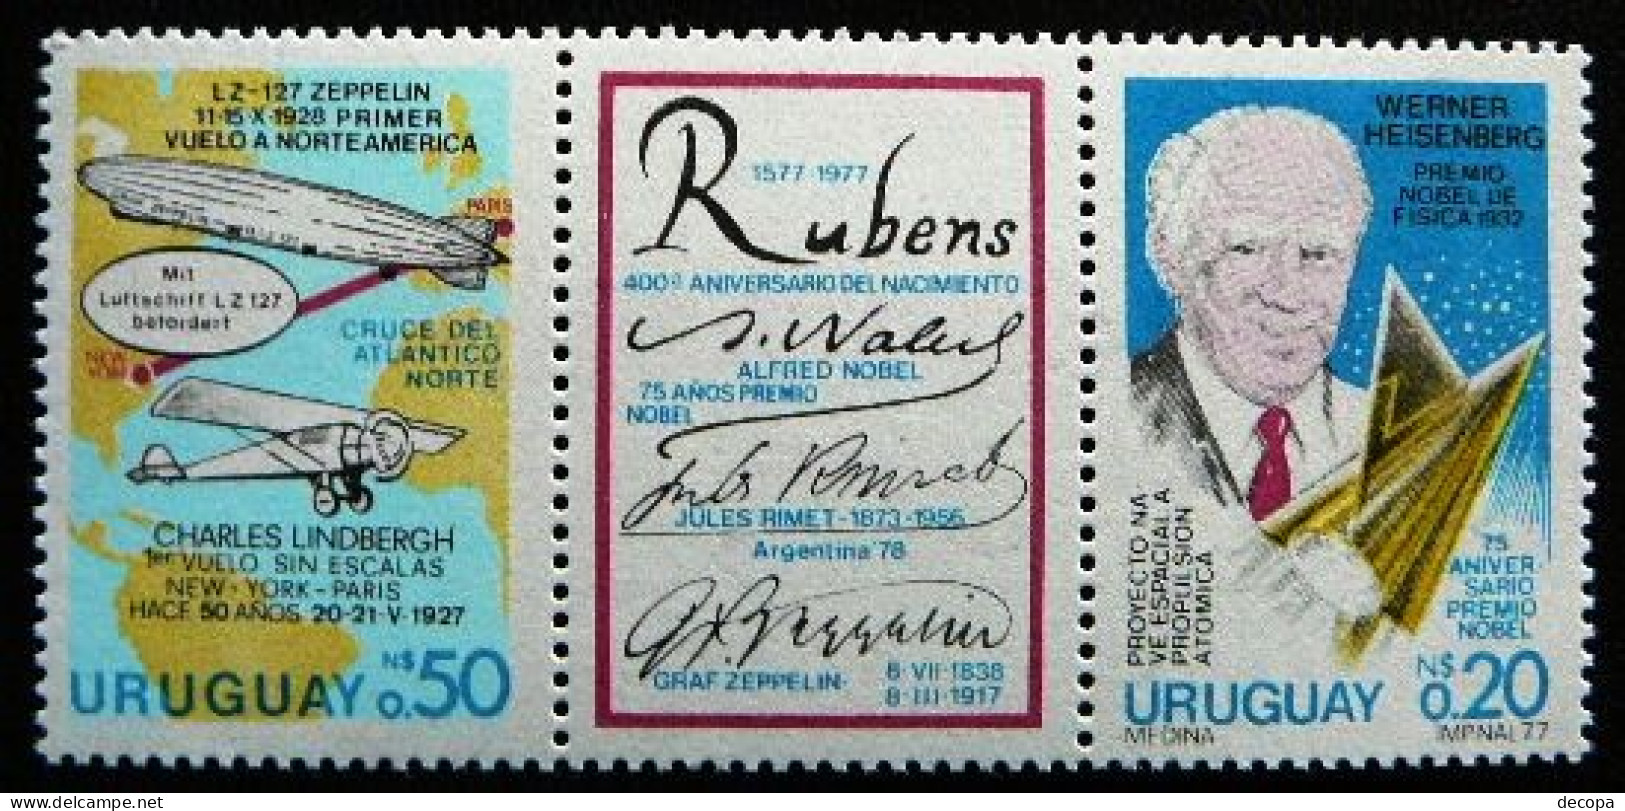 (dcbv-1642) Uruguay   Mi 1453+1455   Strip    1977    MNH     Signature  J. Rimet - Uruguay